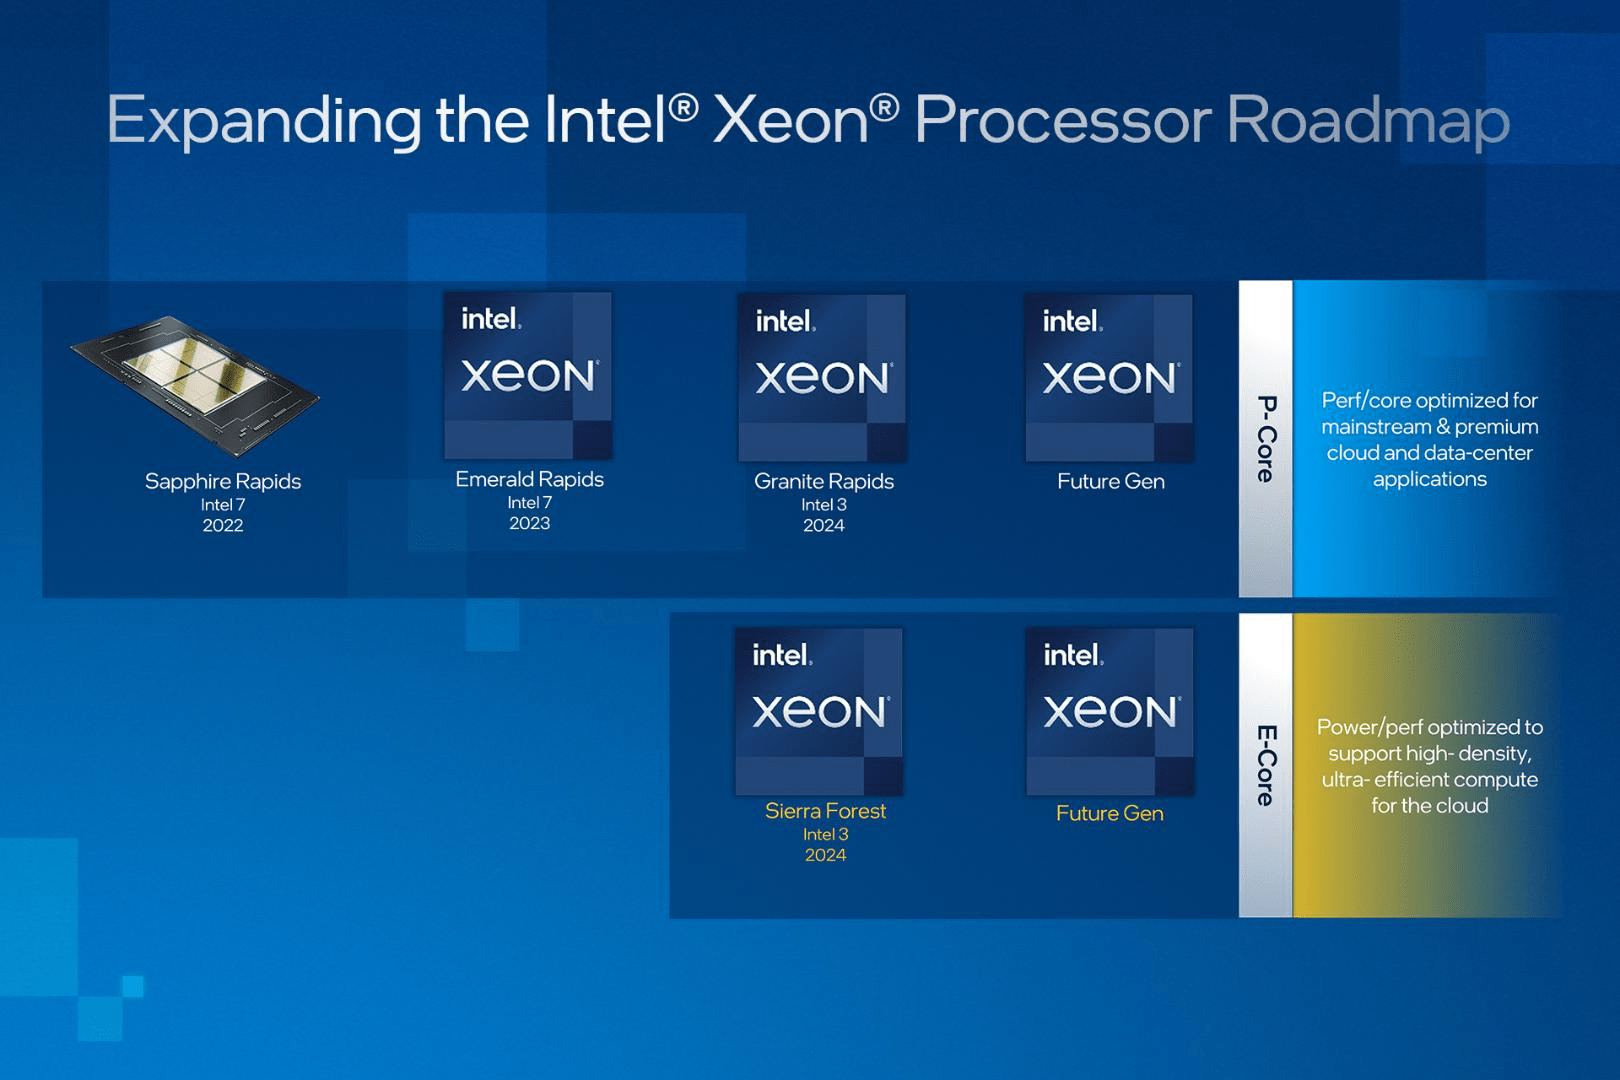 Intel's roadmap for Xeon processors